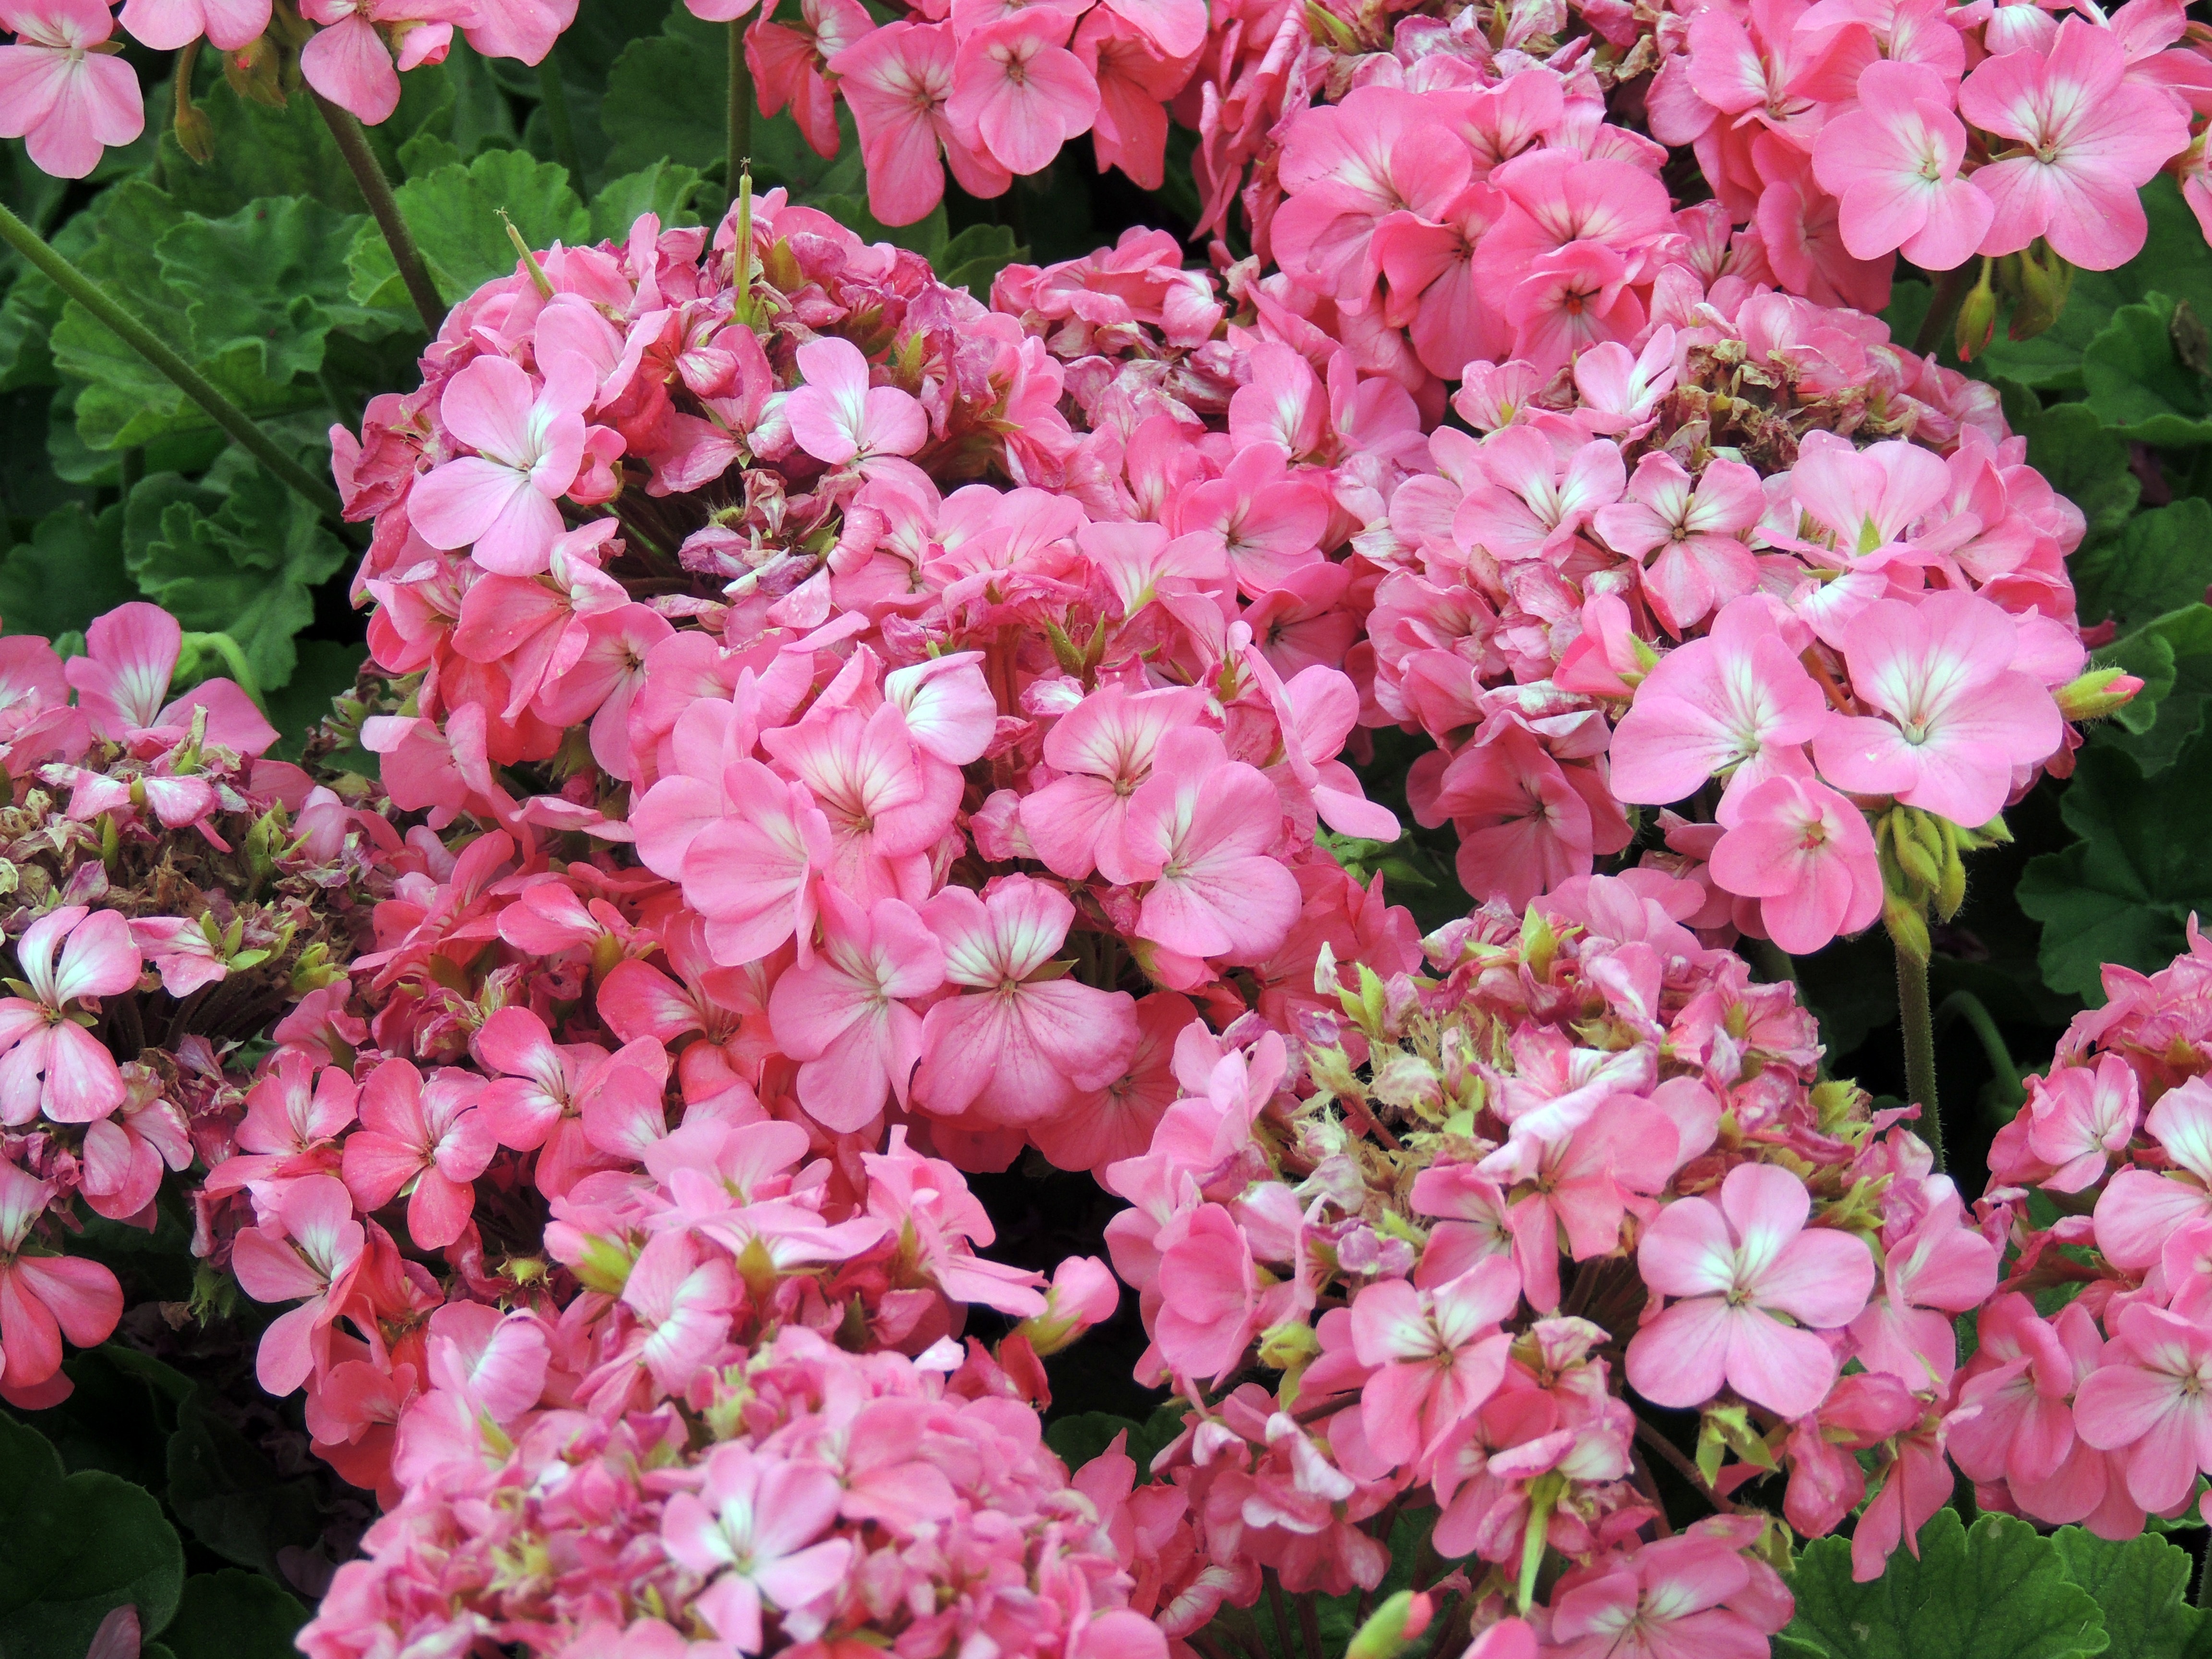 pink geranium flowers